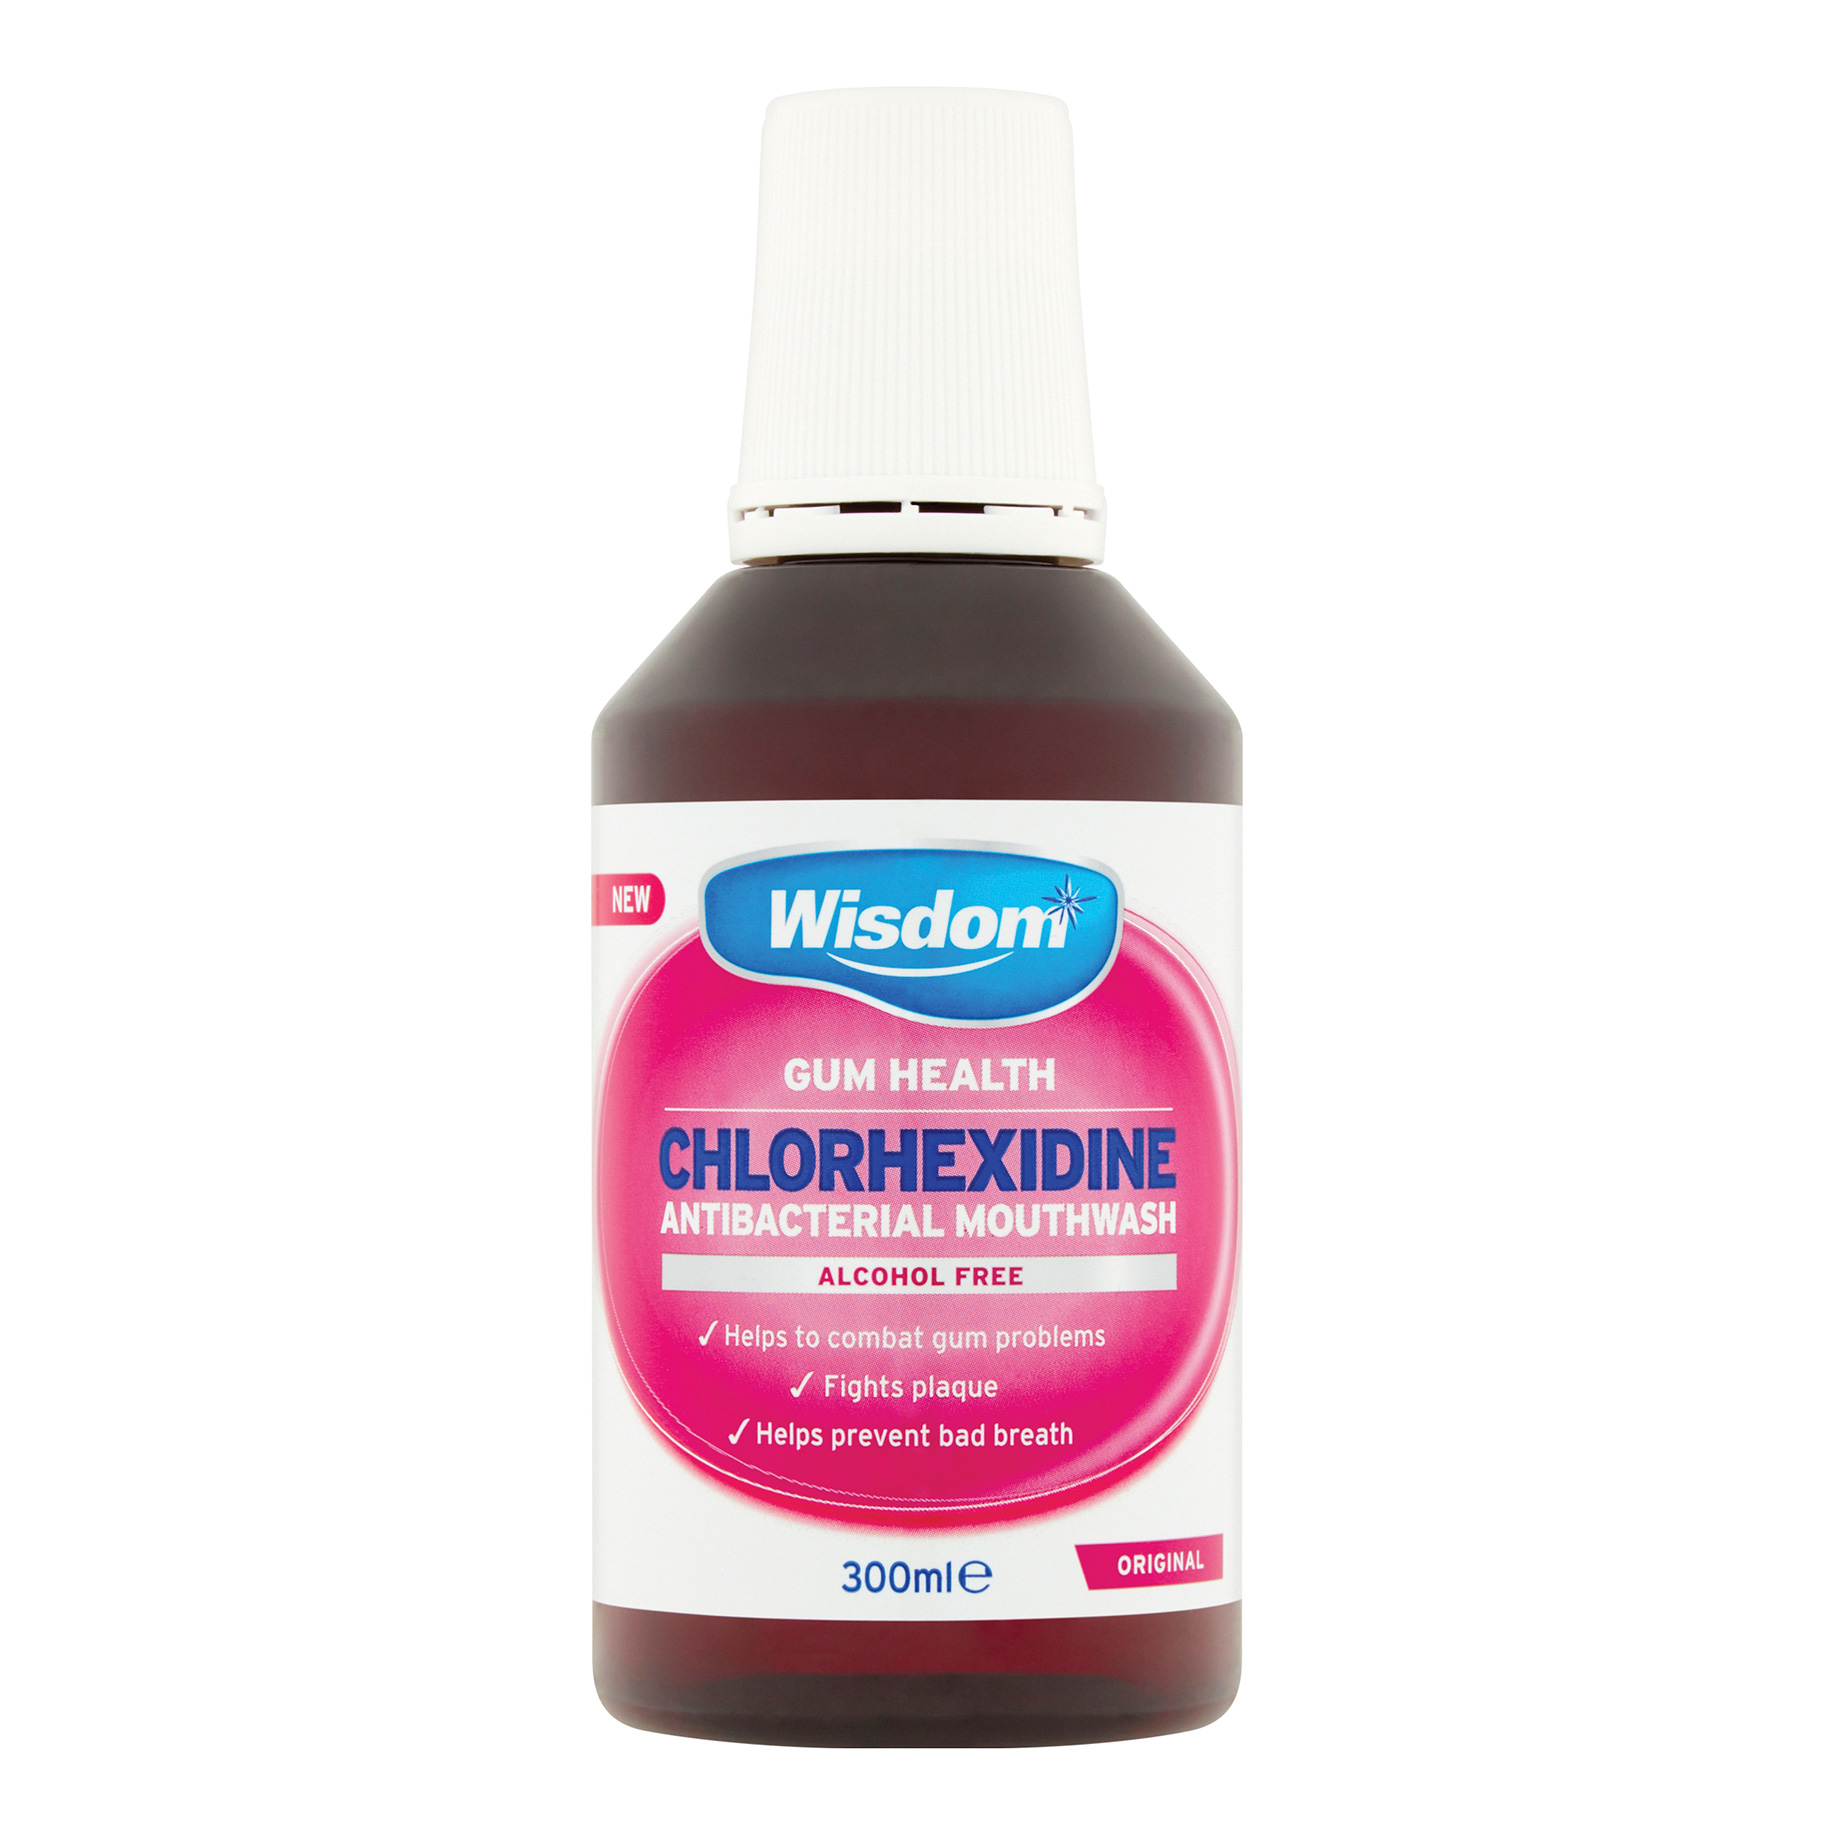 mouthwash with chlorhexidine